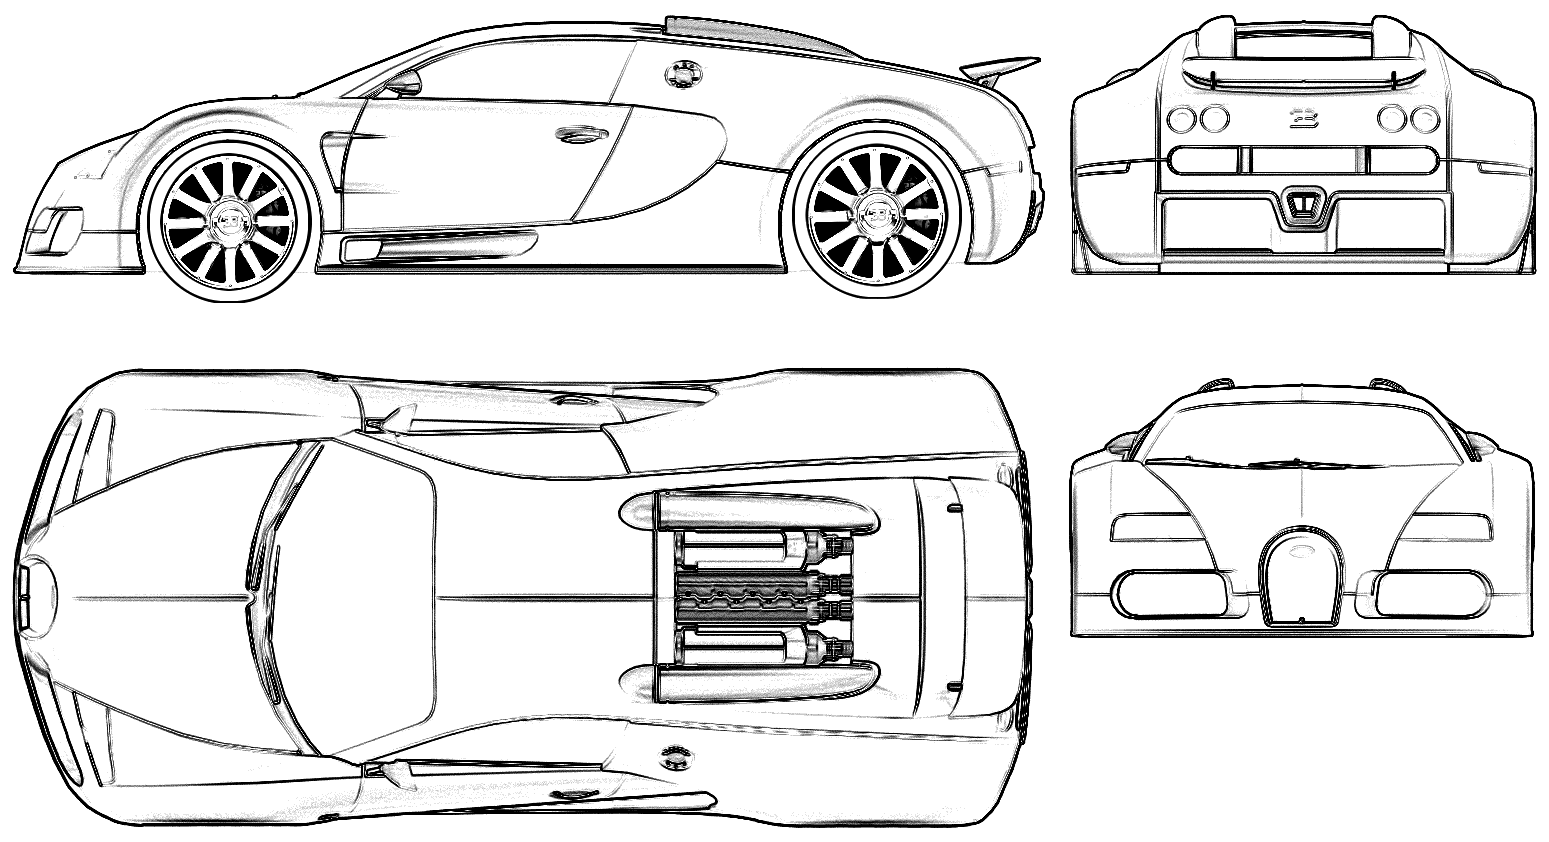 2005 Veyron Coupe 16.4 blueprints Bugatti EB - v2 free Outlines